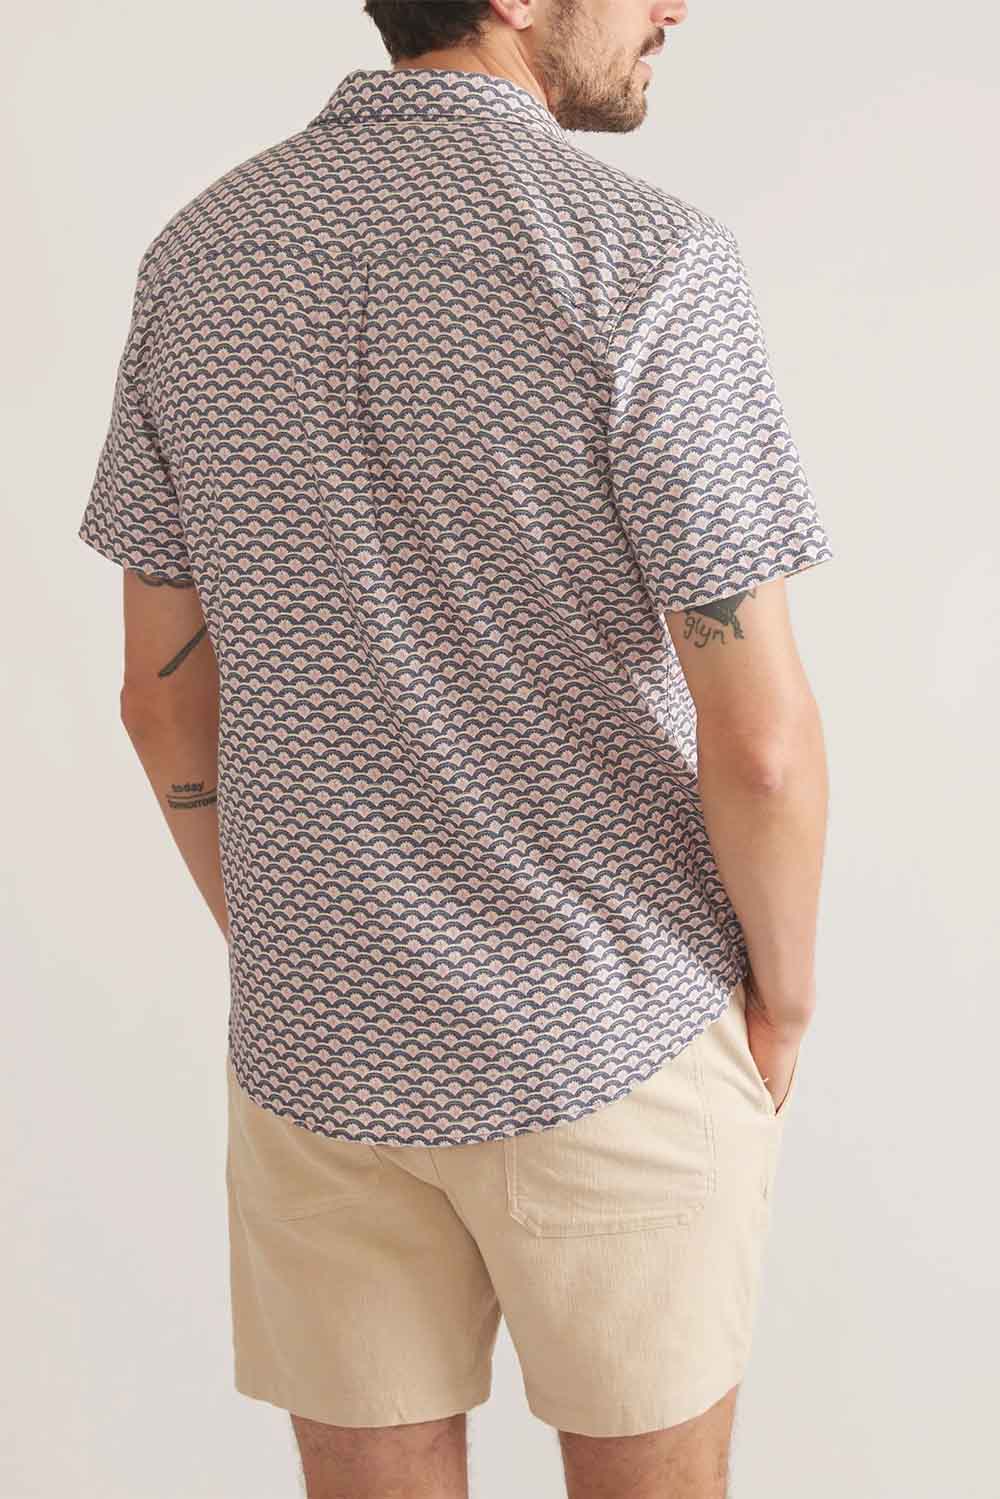 Marine Layer - Stretch Selvage Shirt - Japanese Wave Print - Back